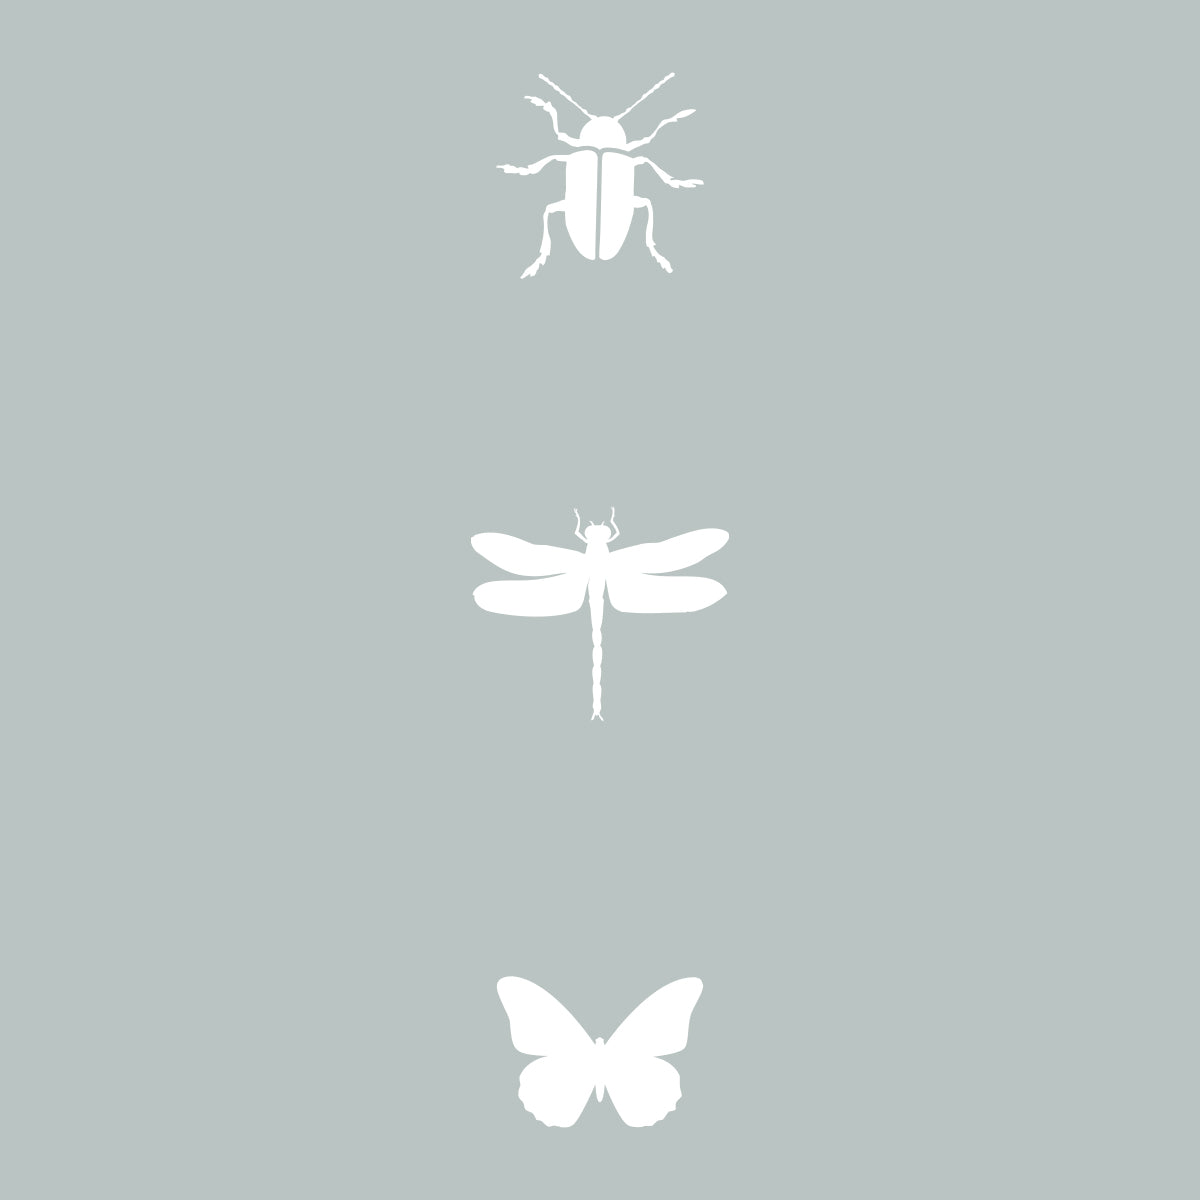 Insect Trio.